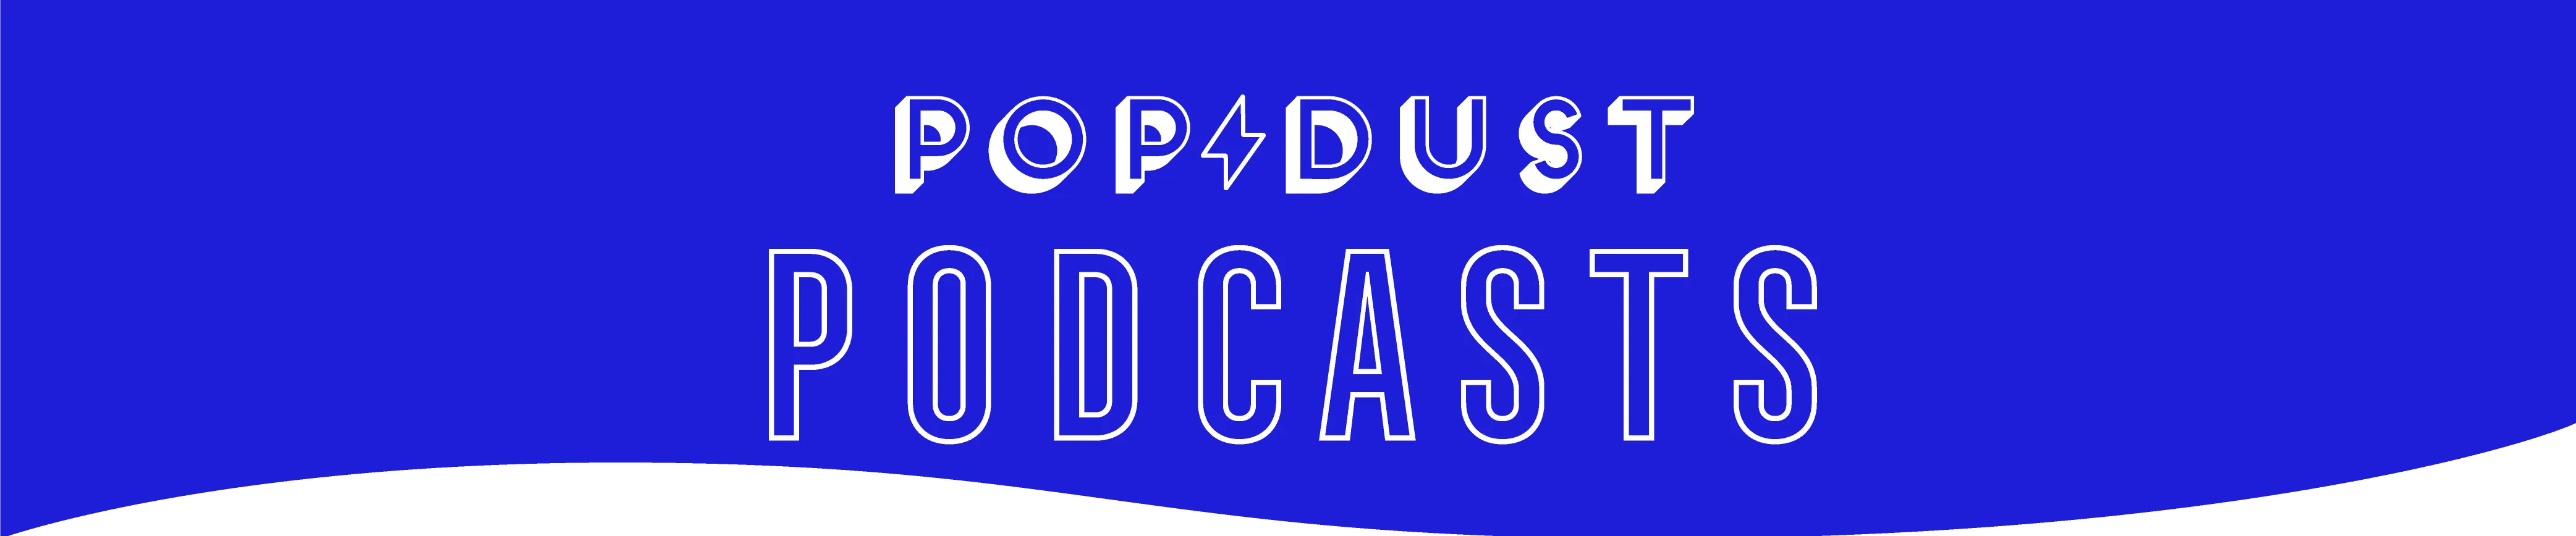 Popdust podcasts